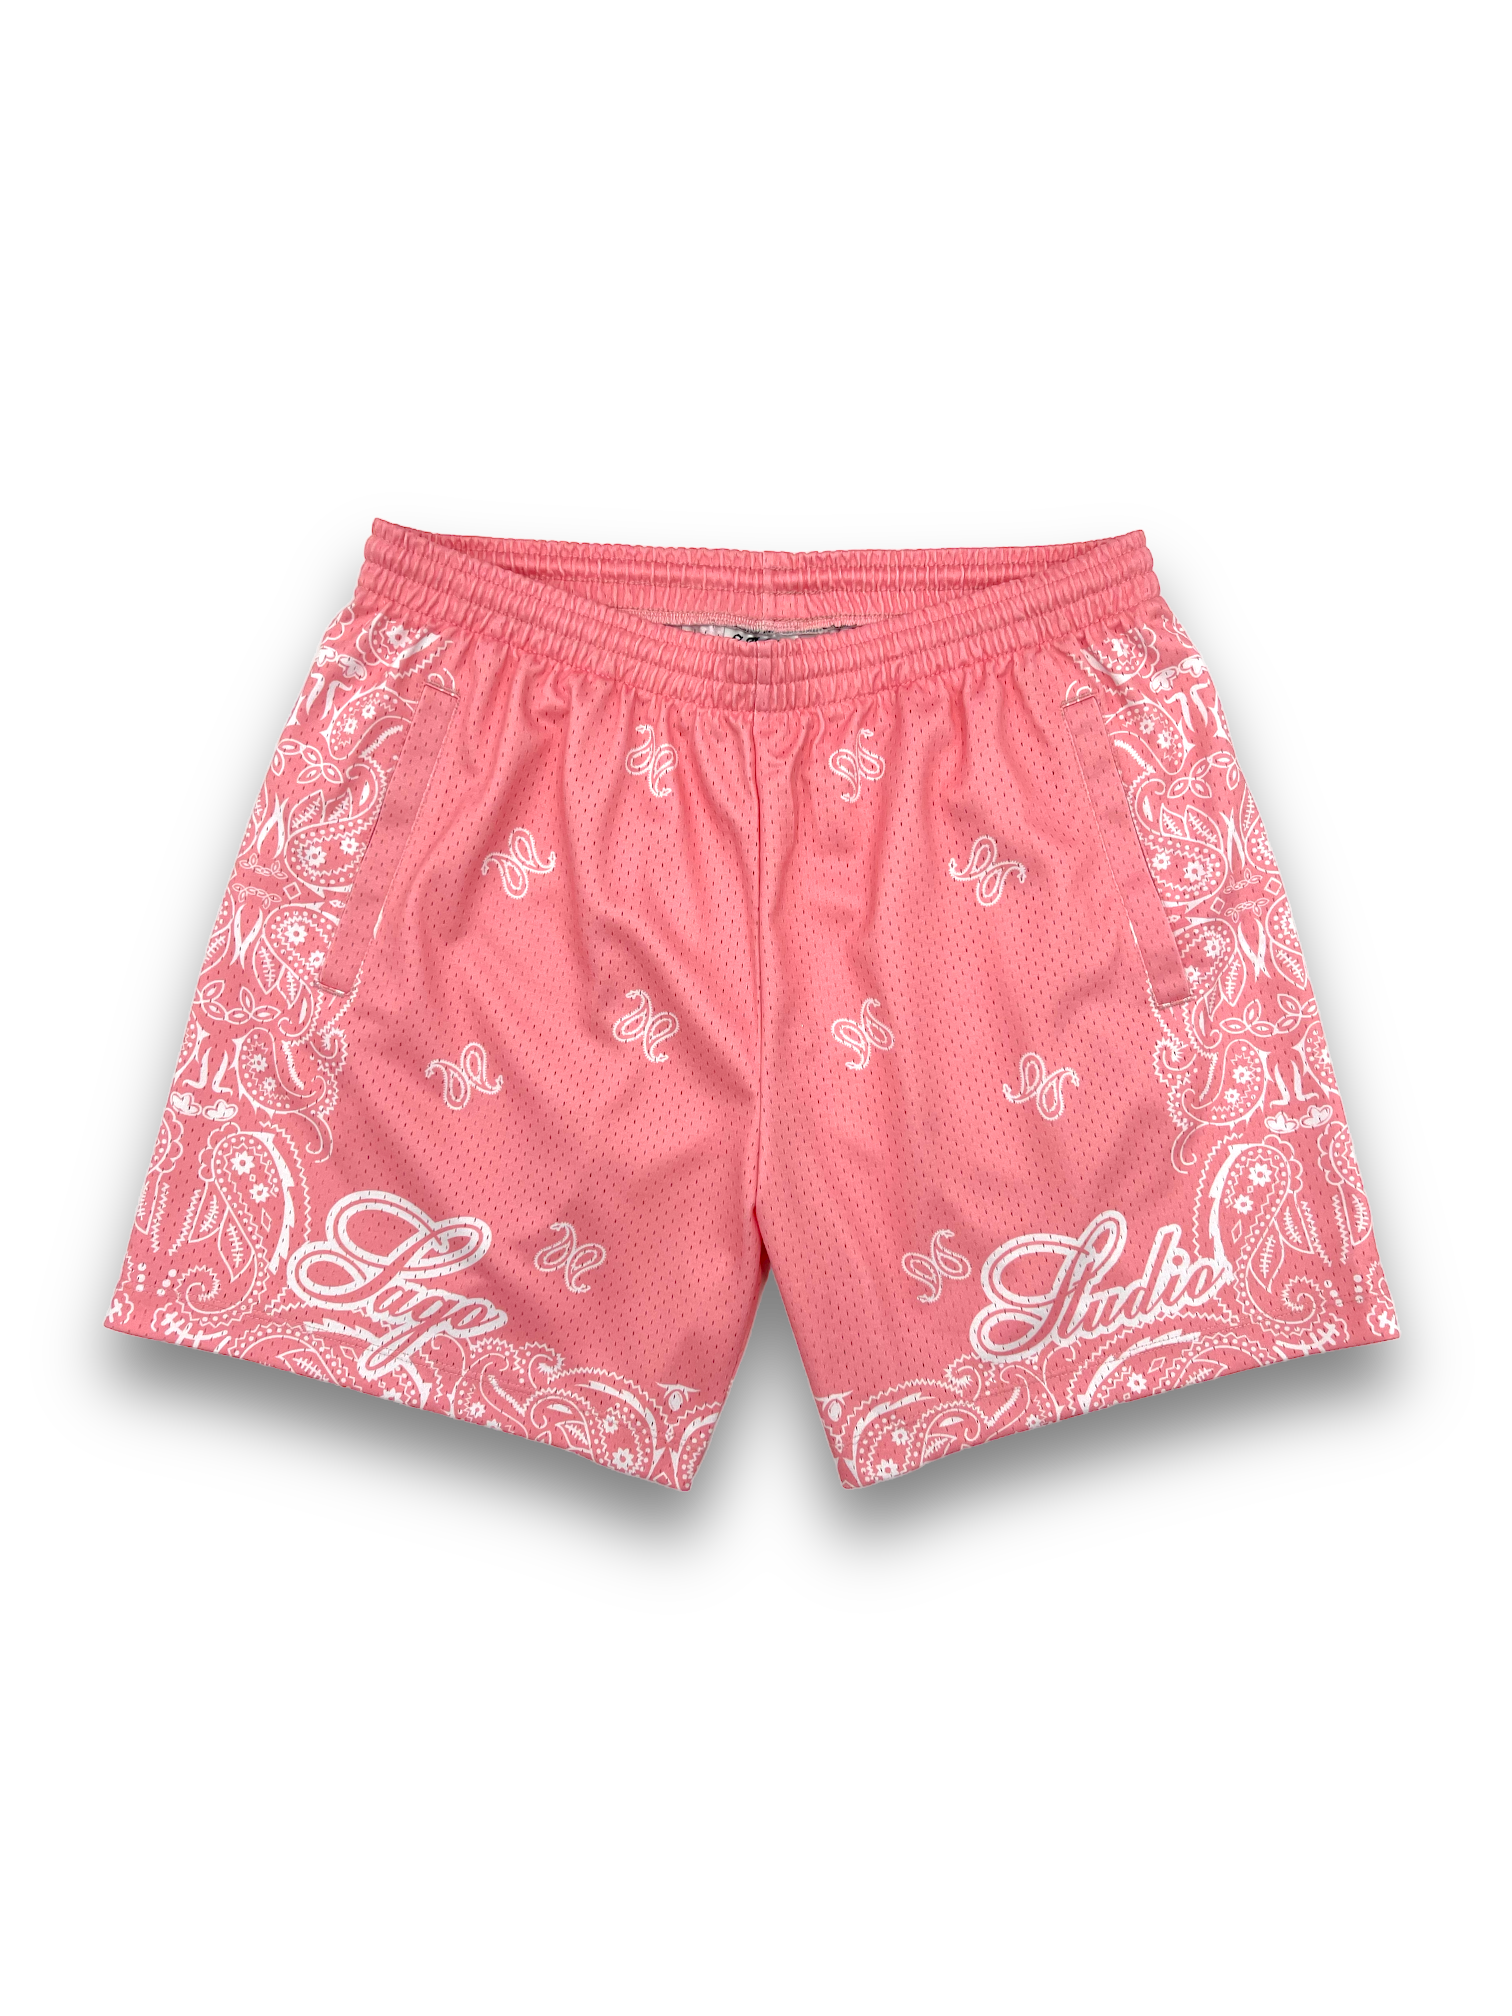 V3 pink bandana shorts